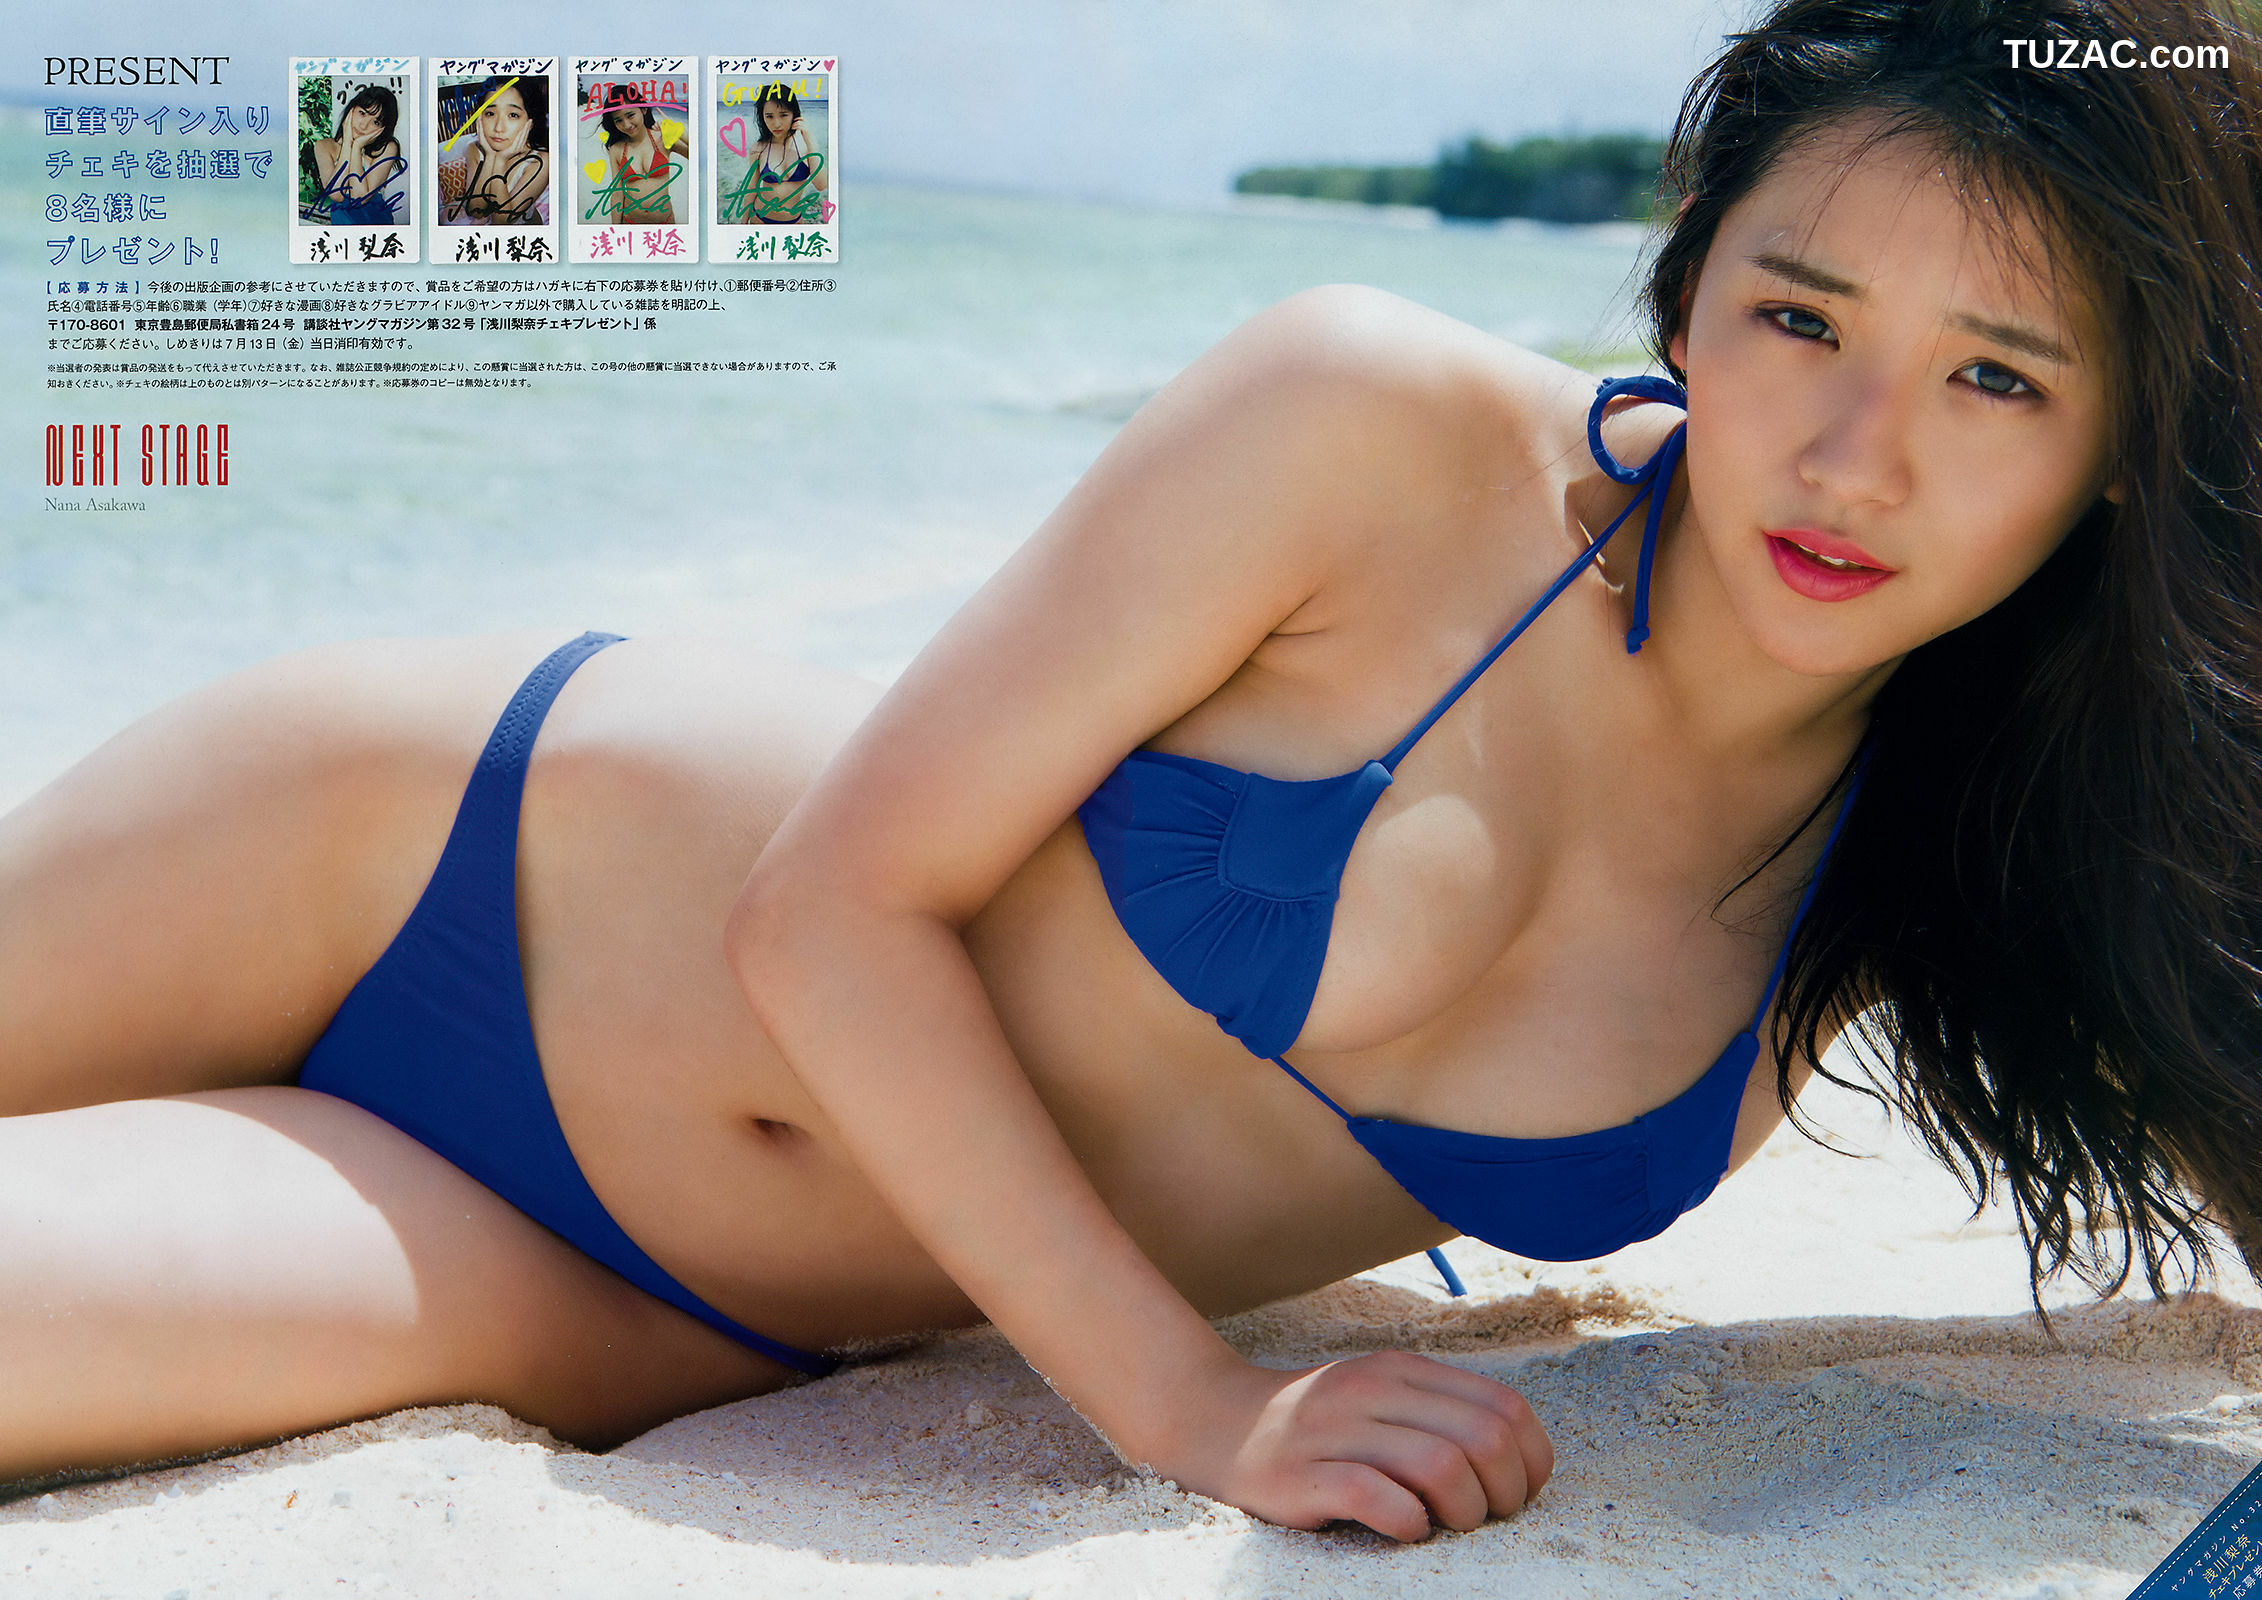 Young Magazine杂志写真_ 浅川梨奈 Nana Asakawa 2018年No.32 写真杂志[12P]